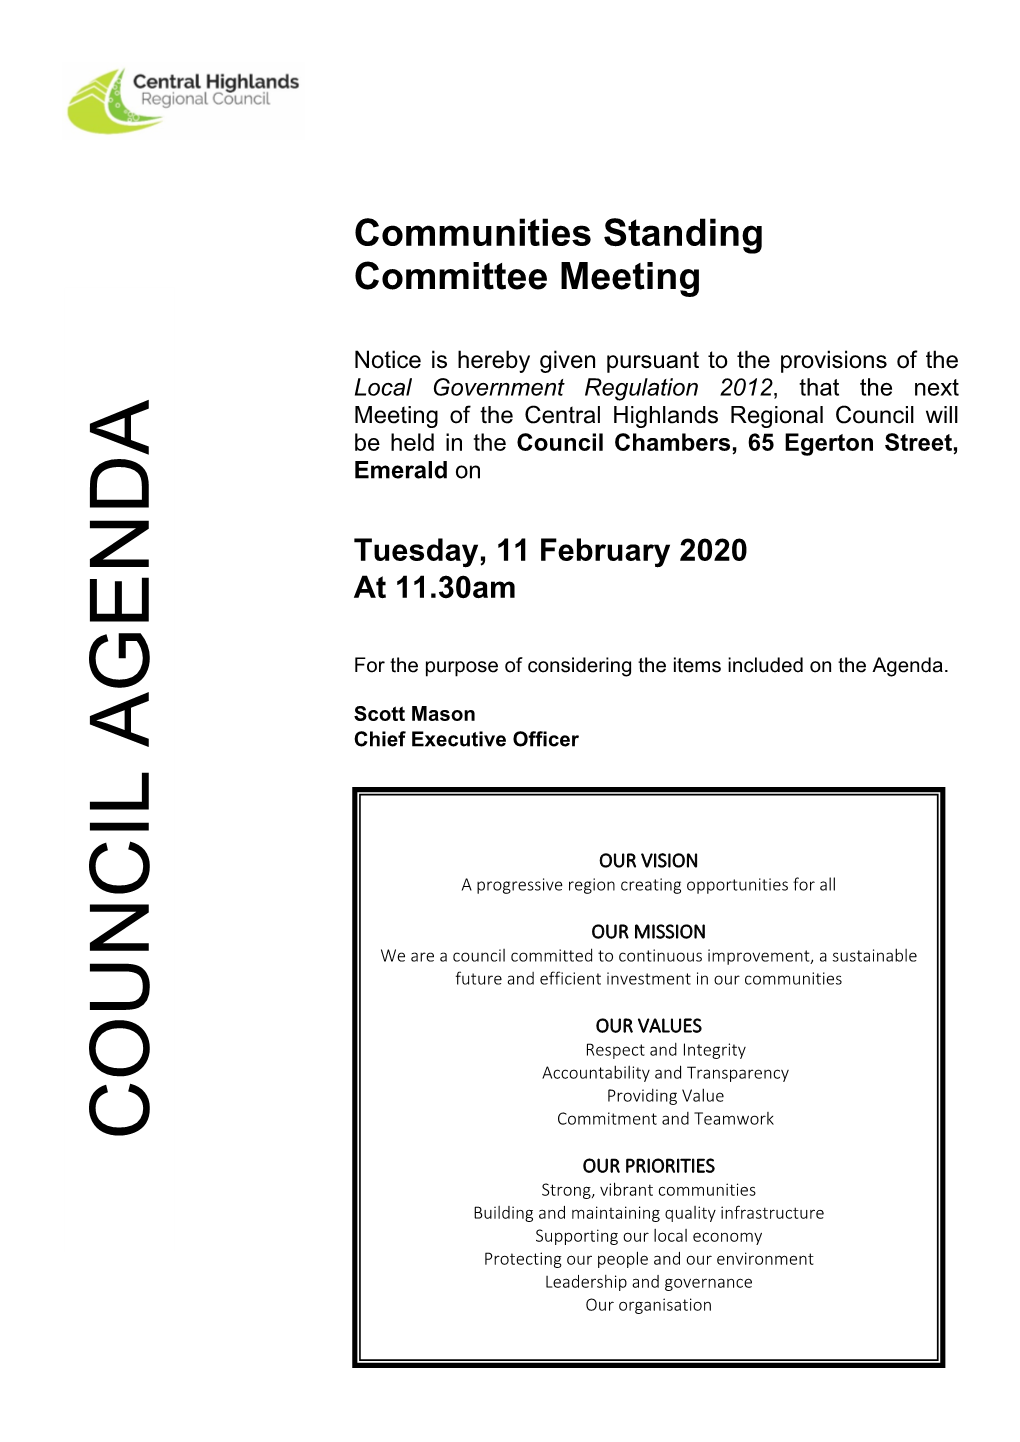 Communities Standing Committee Meeting